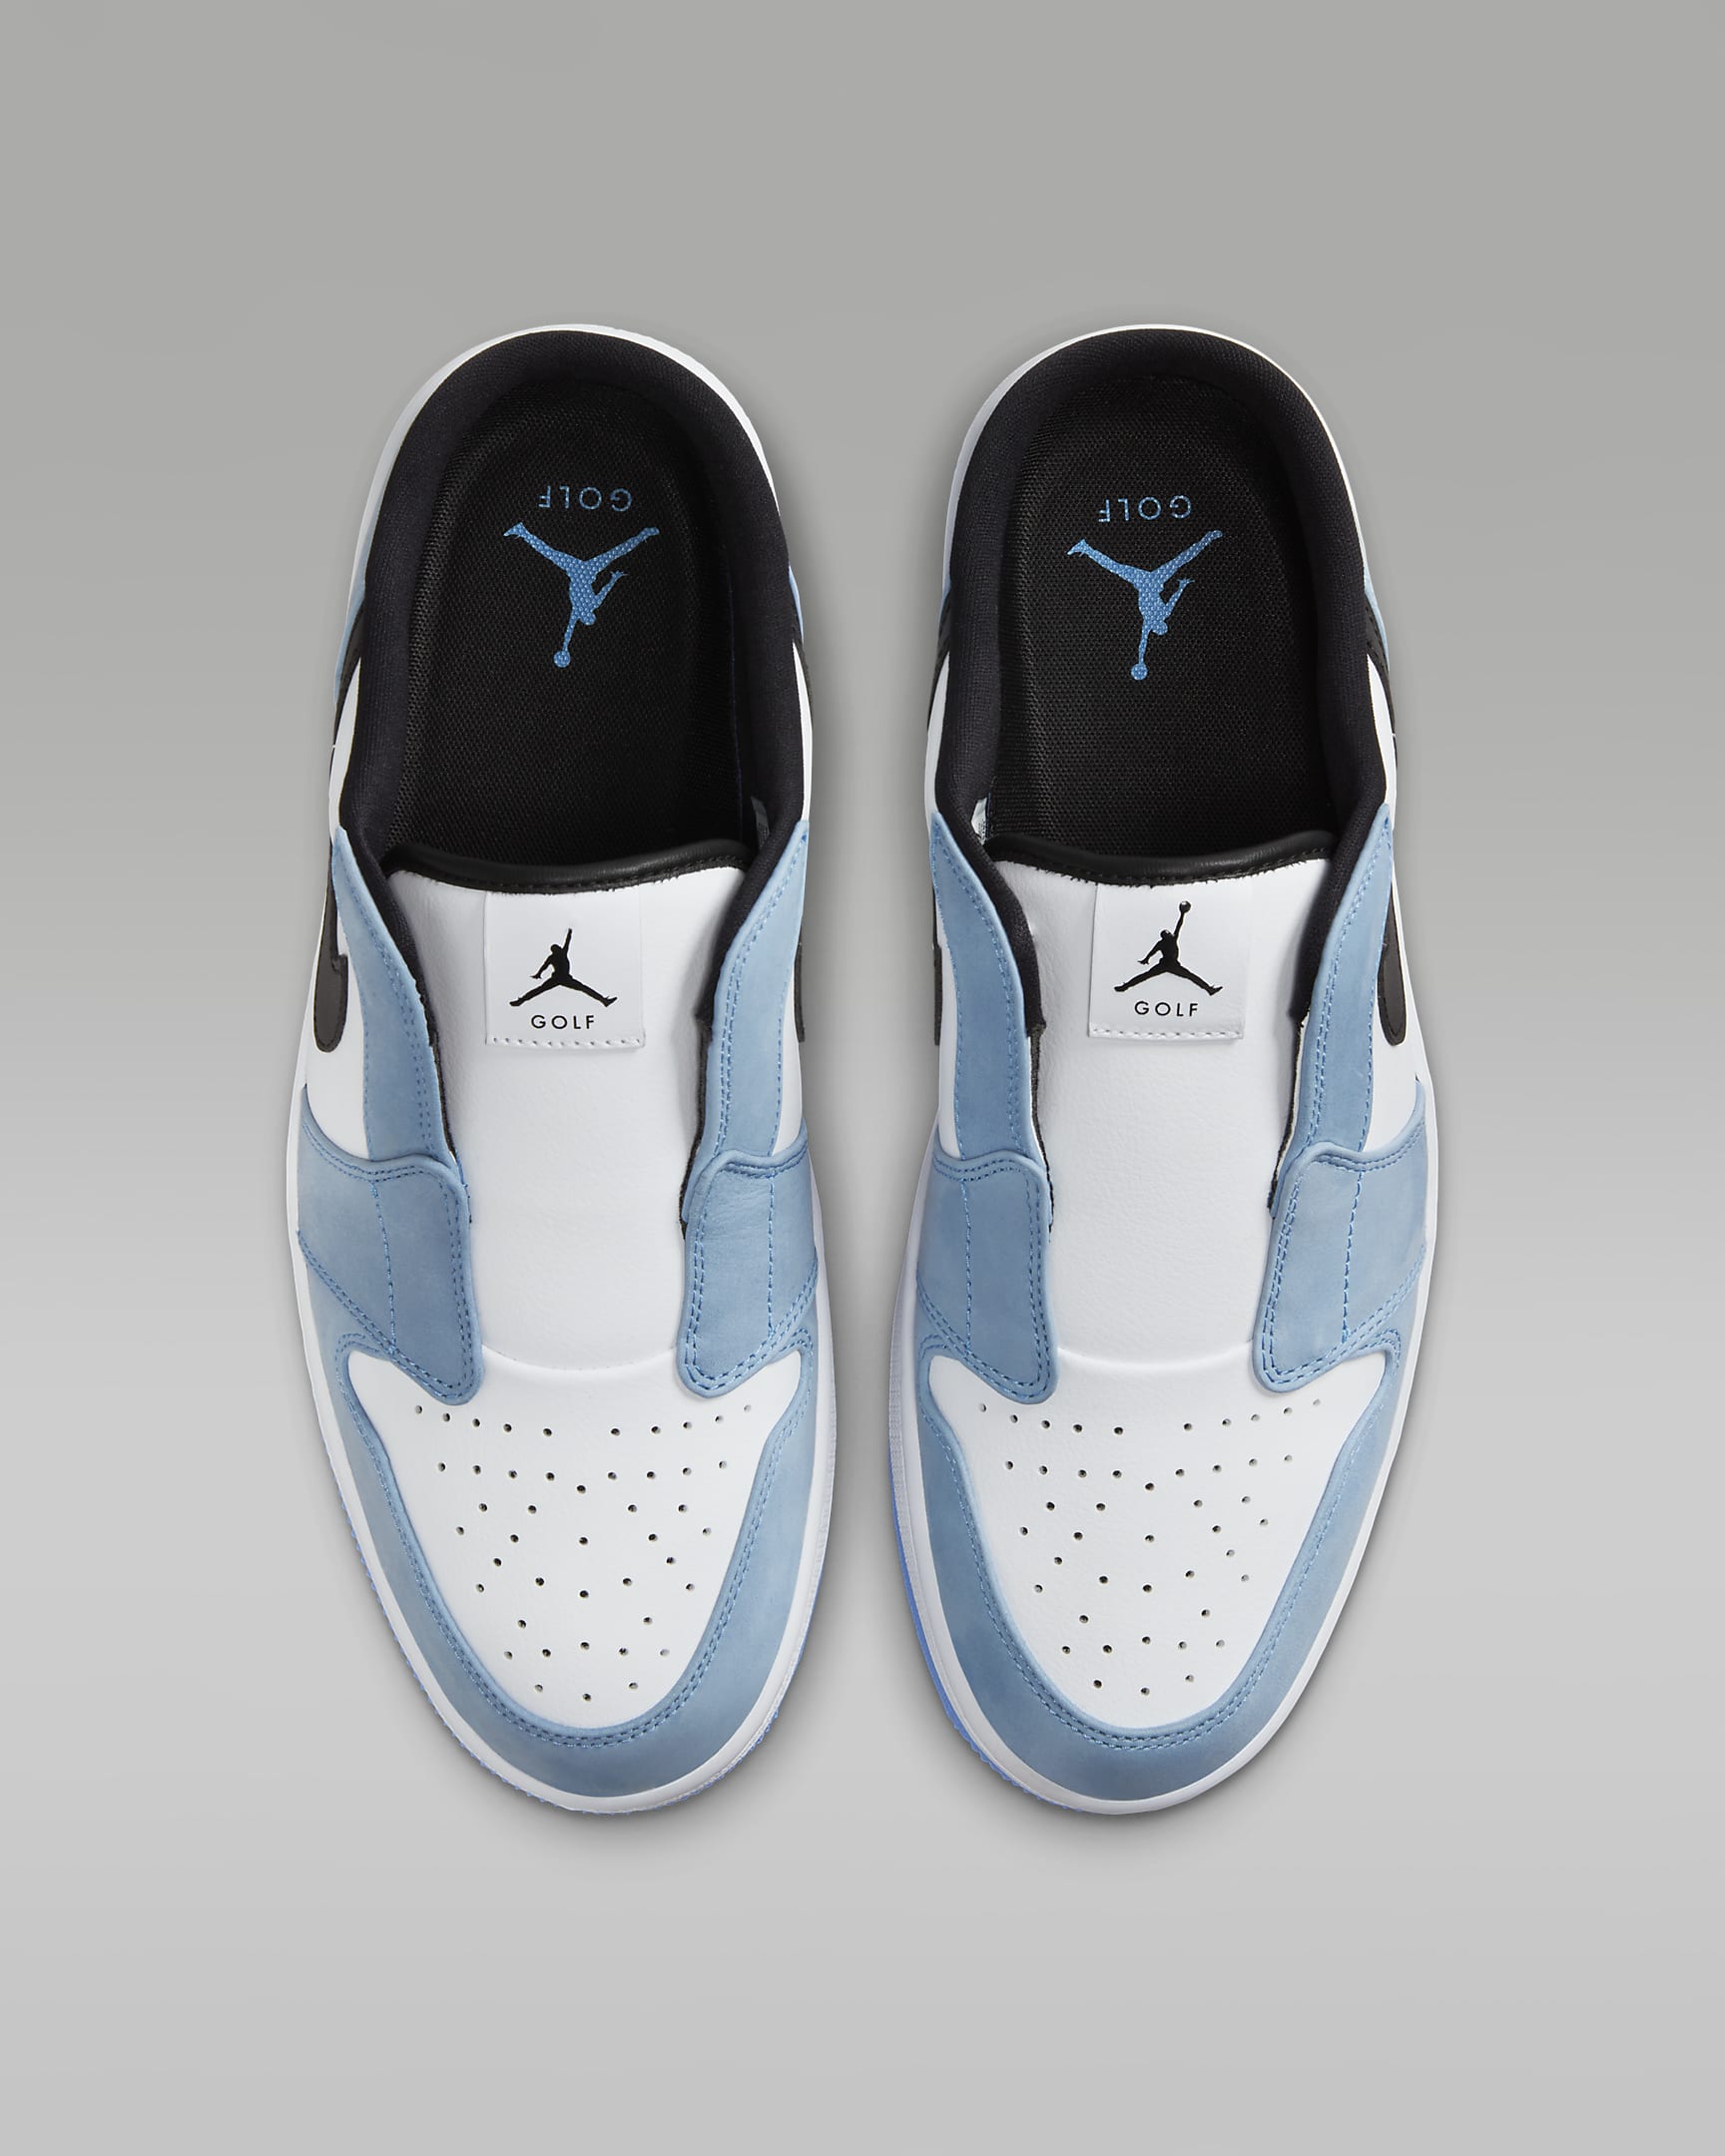 Nike Jordan Mule Mens Shoe Review: Why You Should Consider?